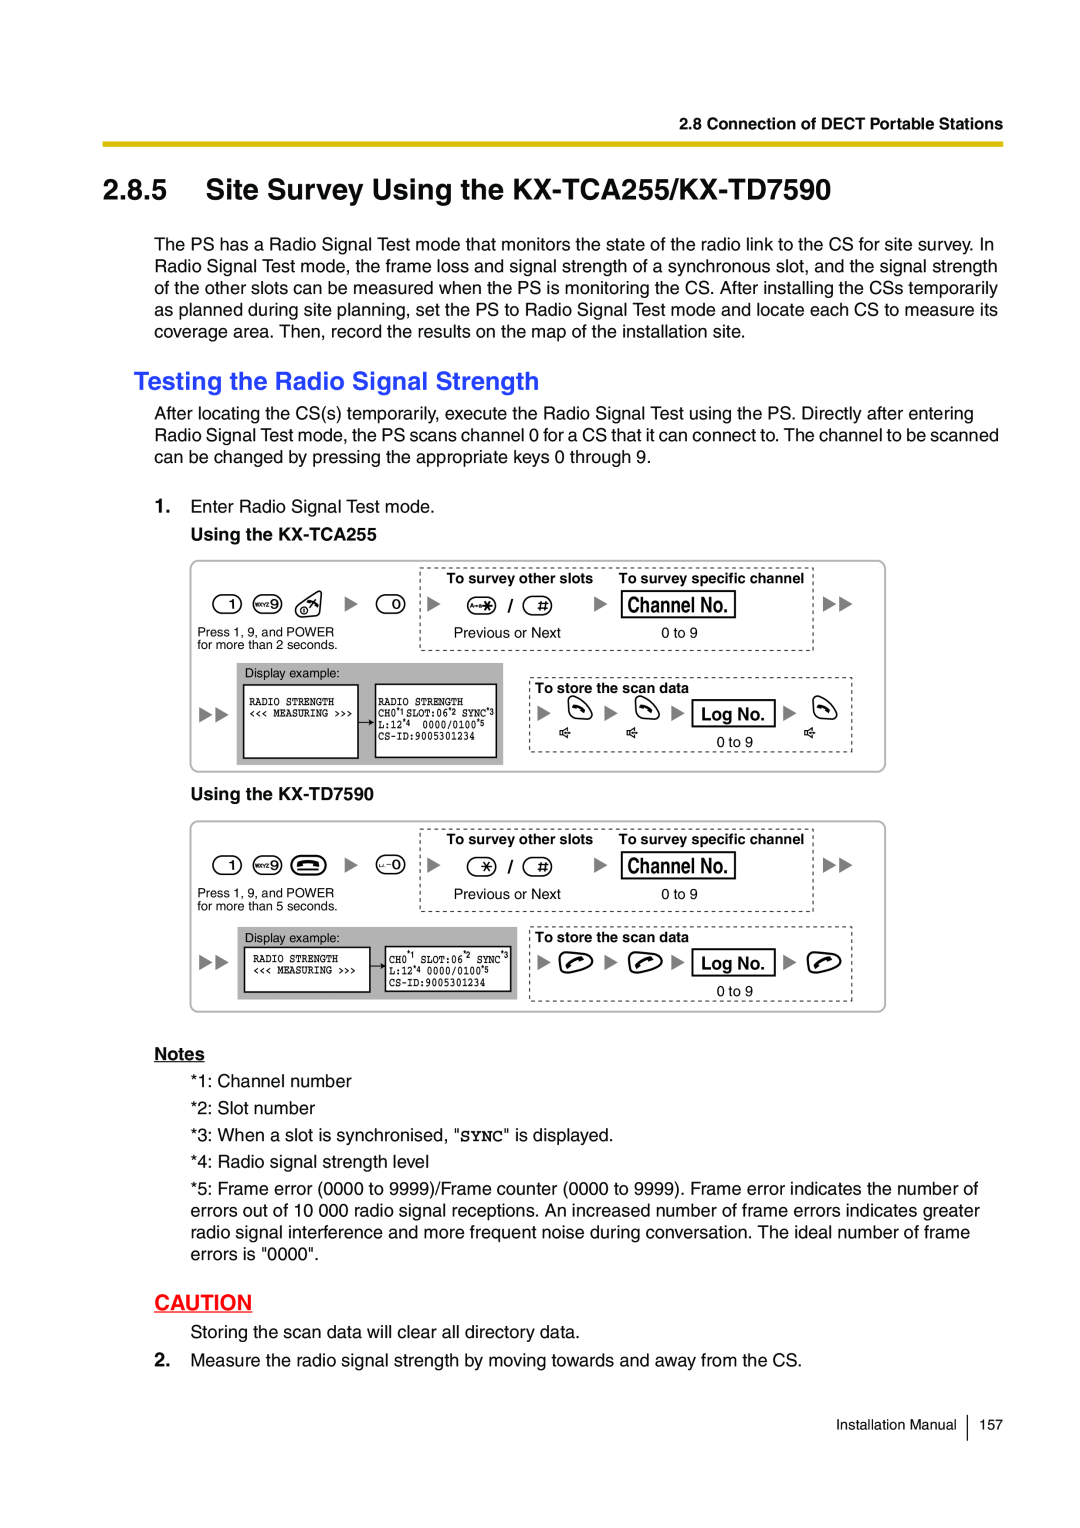 Panasonic KX-TDA100 Site Survey Using the KX-TCA255/KX-TD7590, Testing the Radio Signal Strength, Channel No 